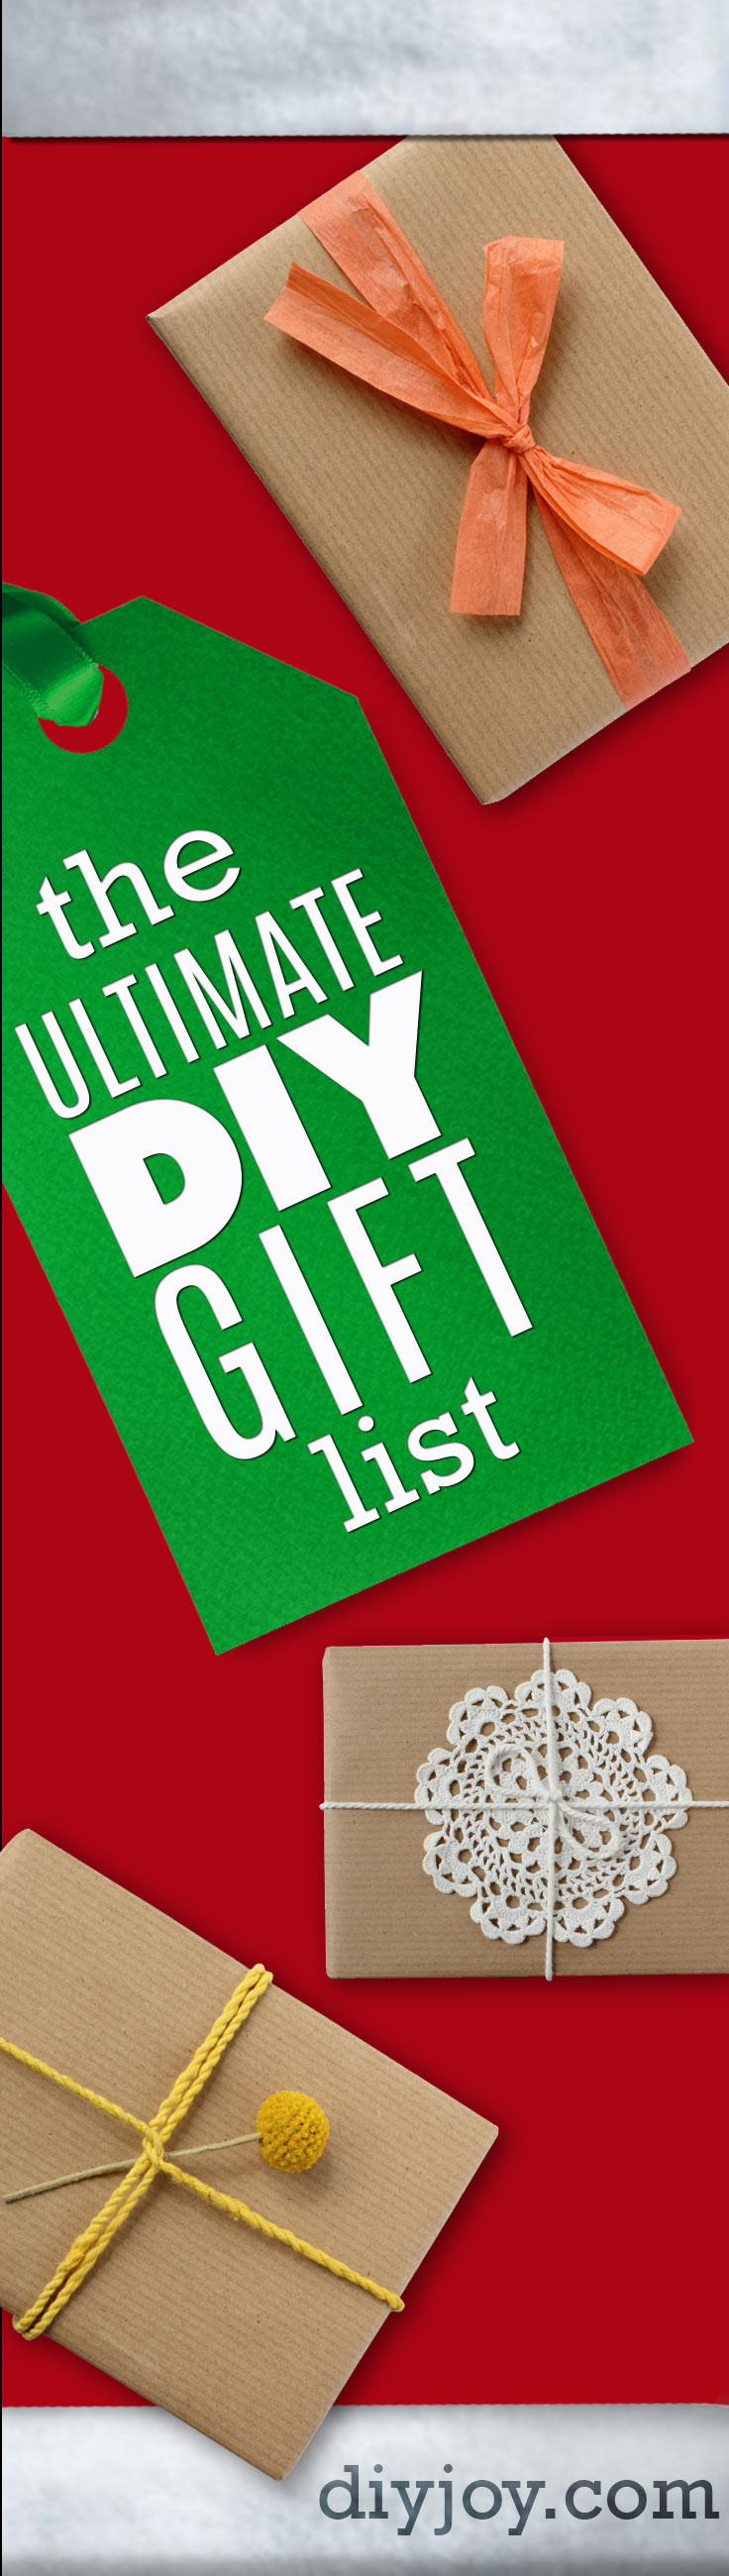 Pinterest DIY Christmas Gifts
 The Ultimate DIY Christmas Gifts list